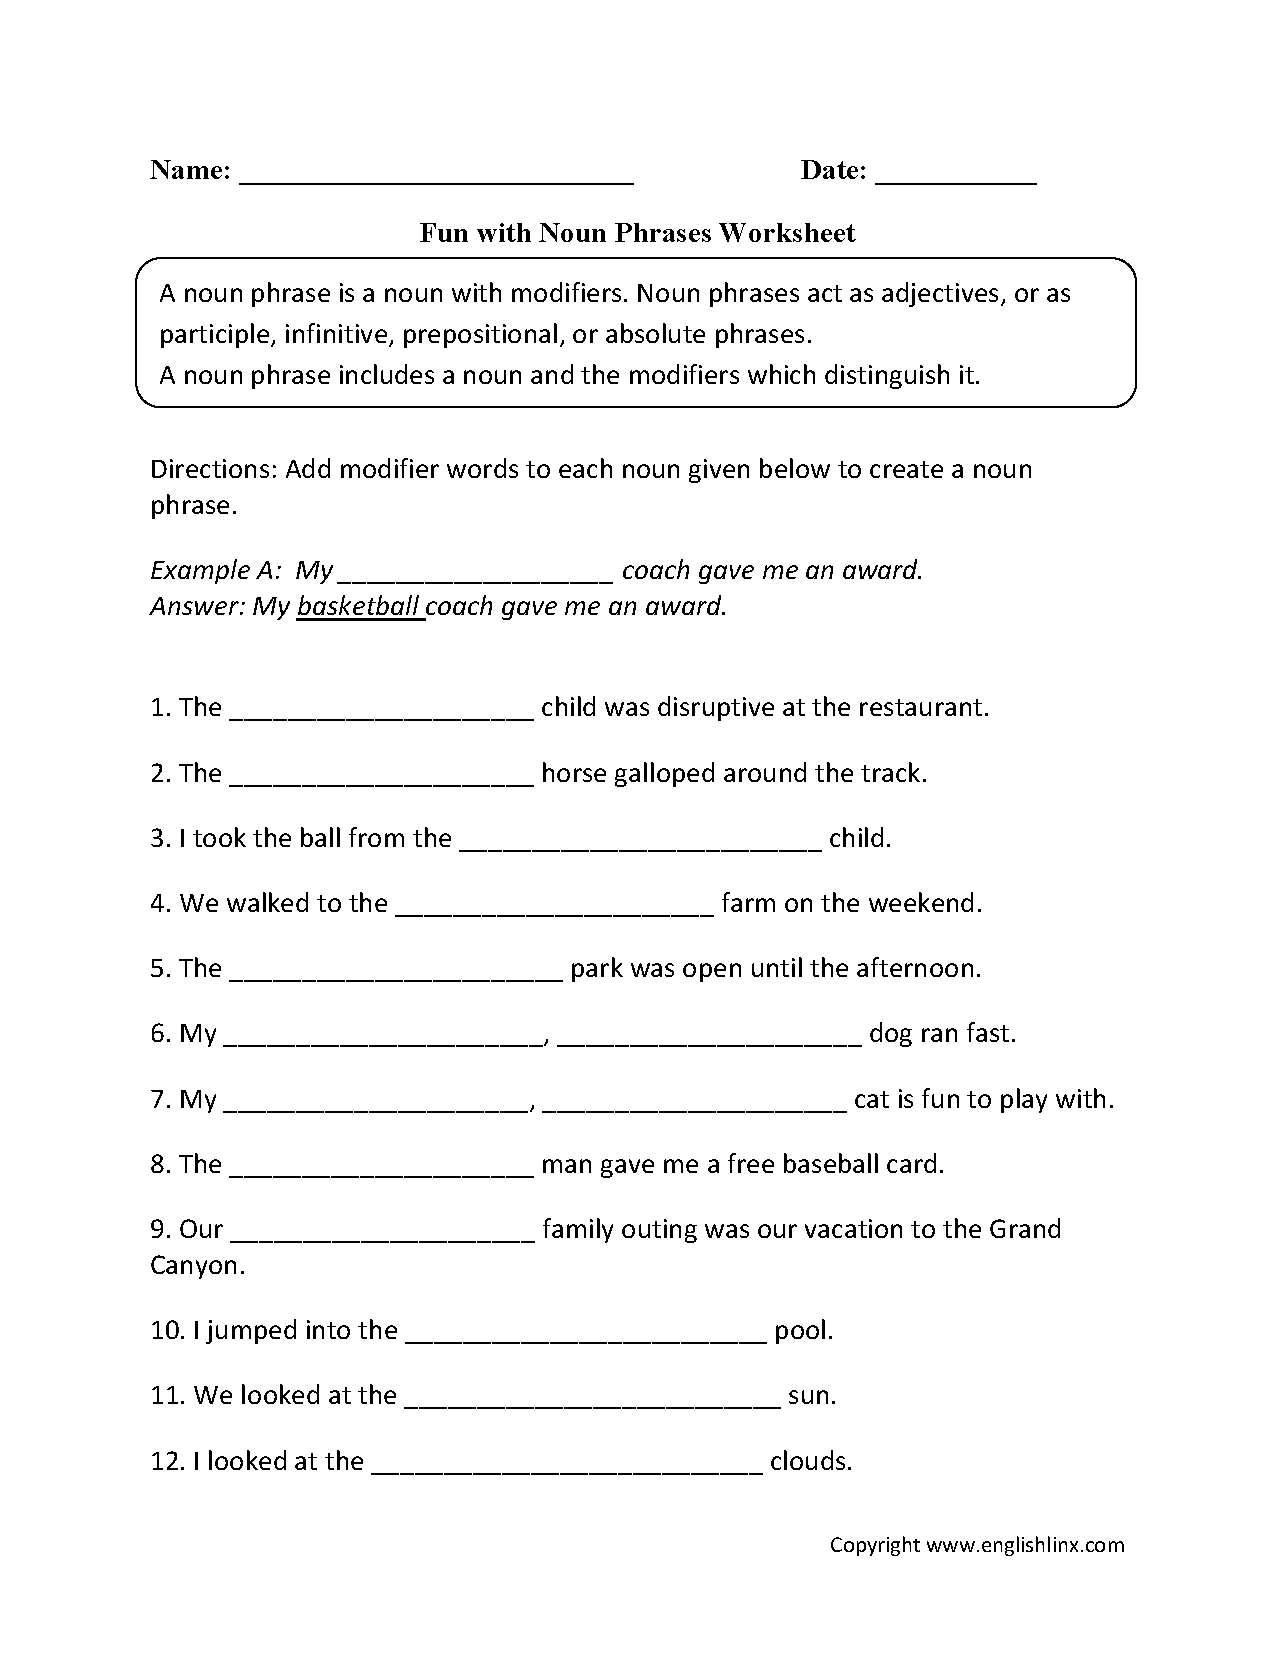 worksheet. Preposition Worksheets For Middle School. Worksheet Fun